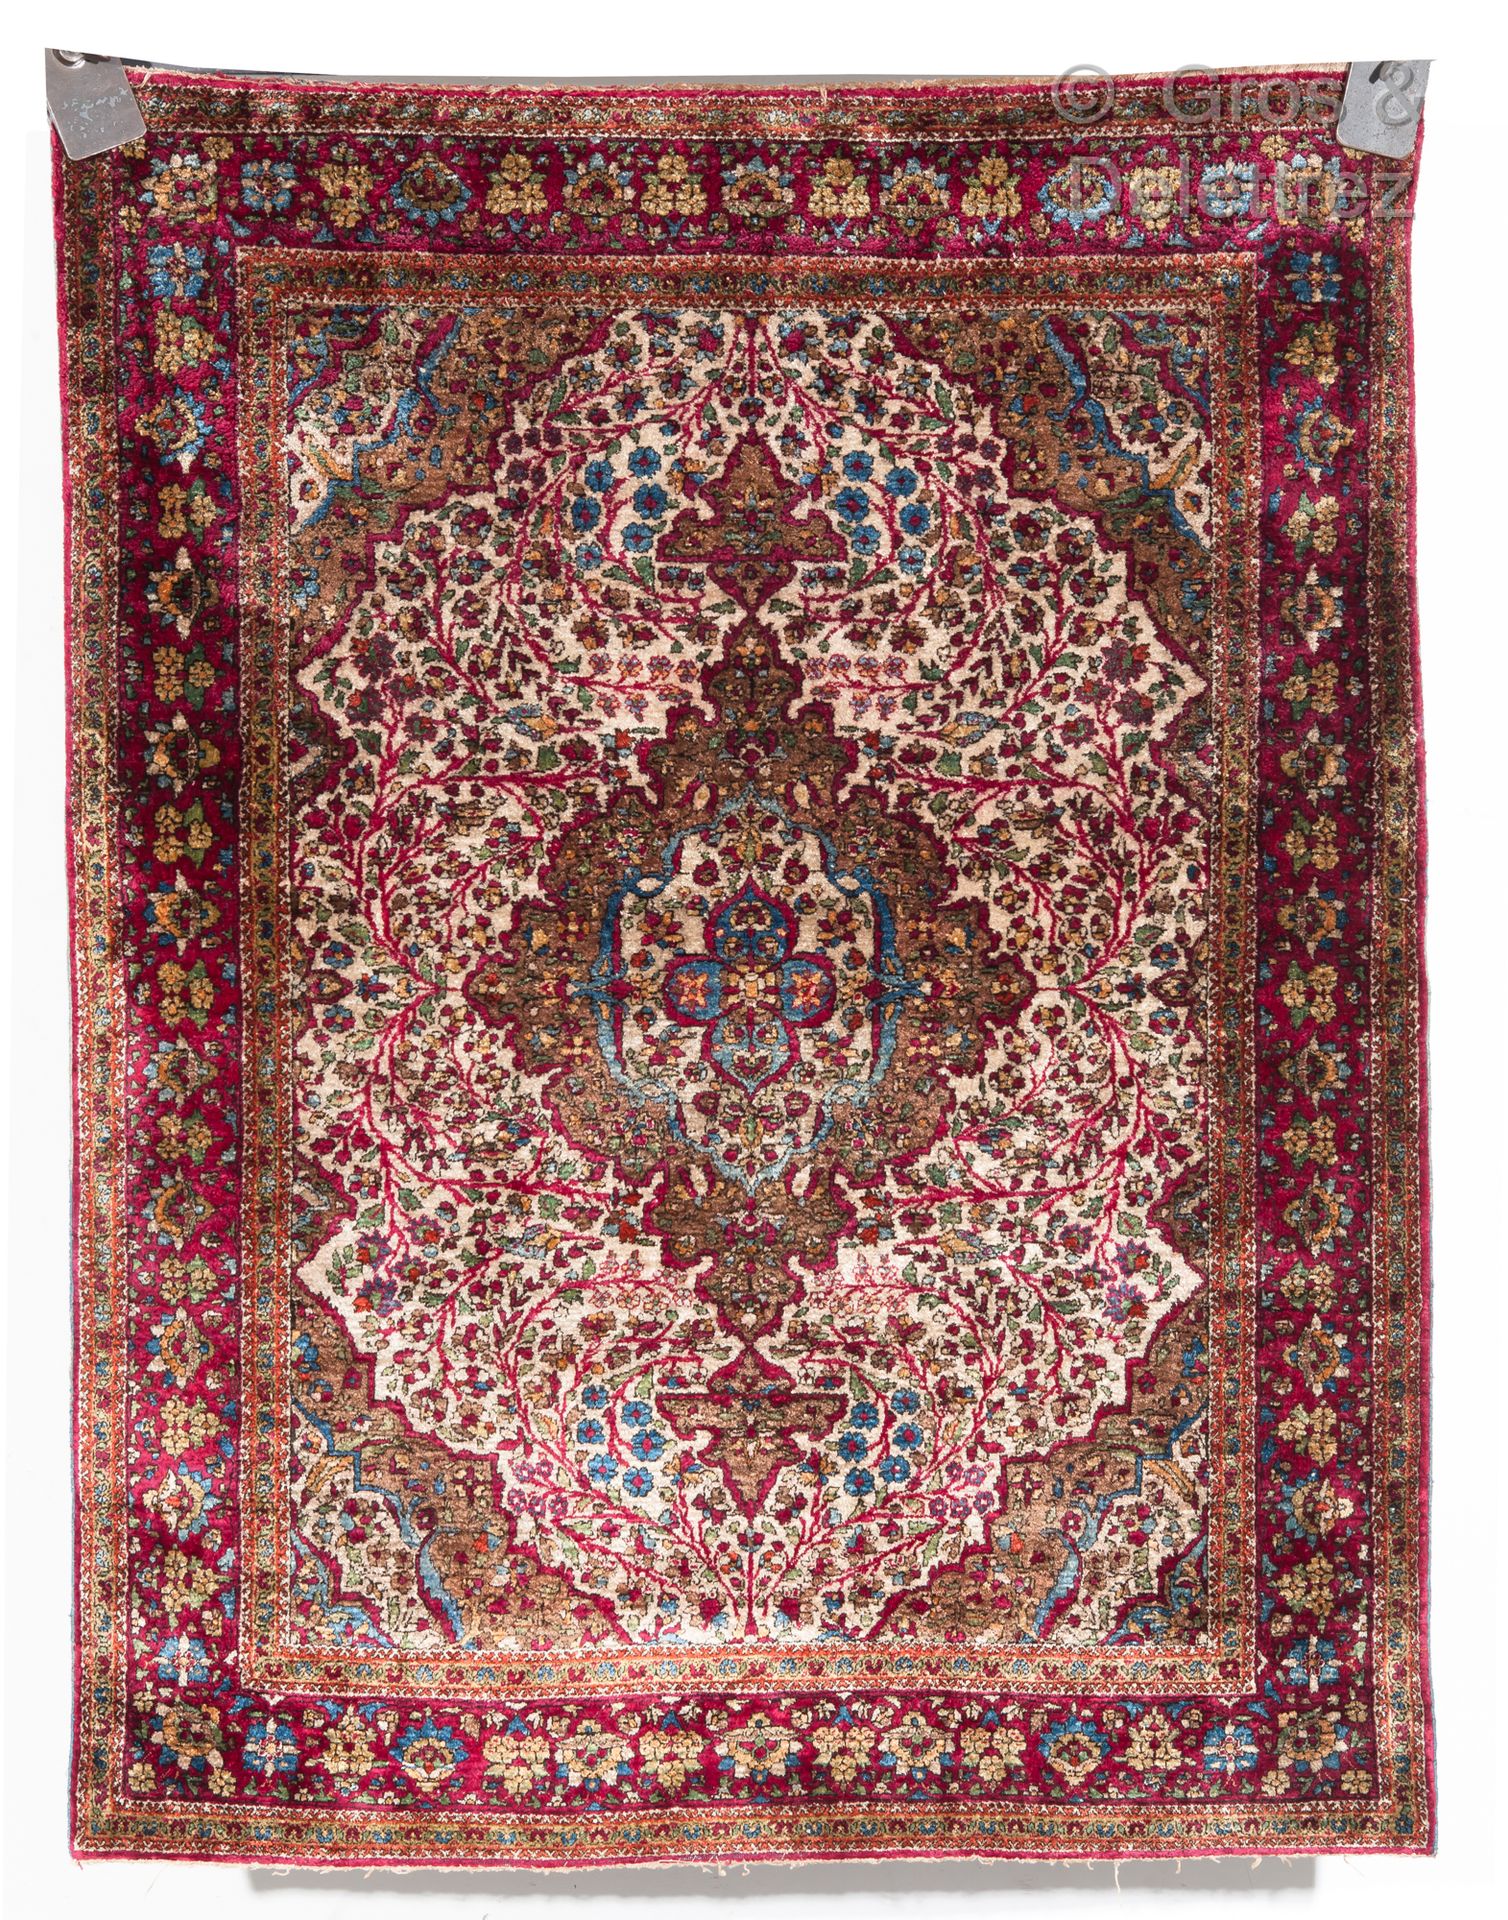 Null Un antico tappeto di seta Kirman, Iran

Un bel tappeto antico Kirman (Kerma&hellip;